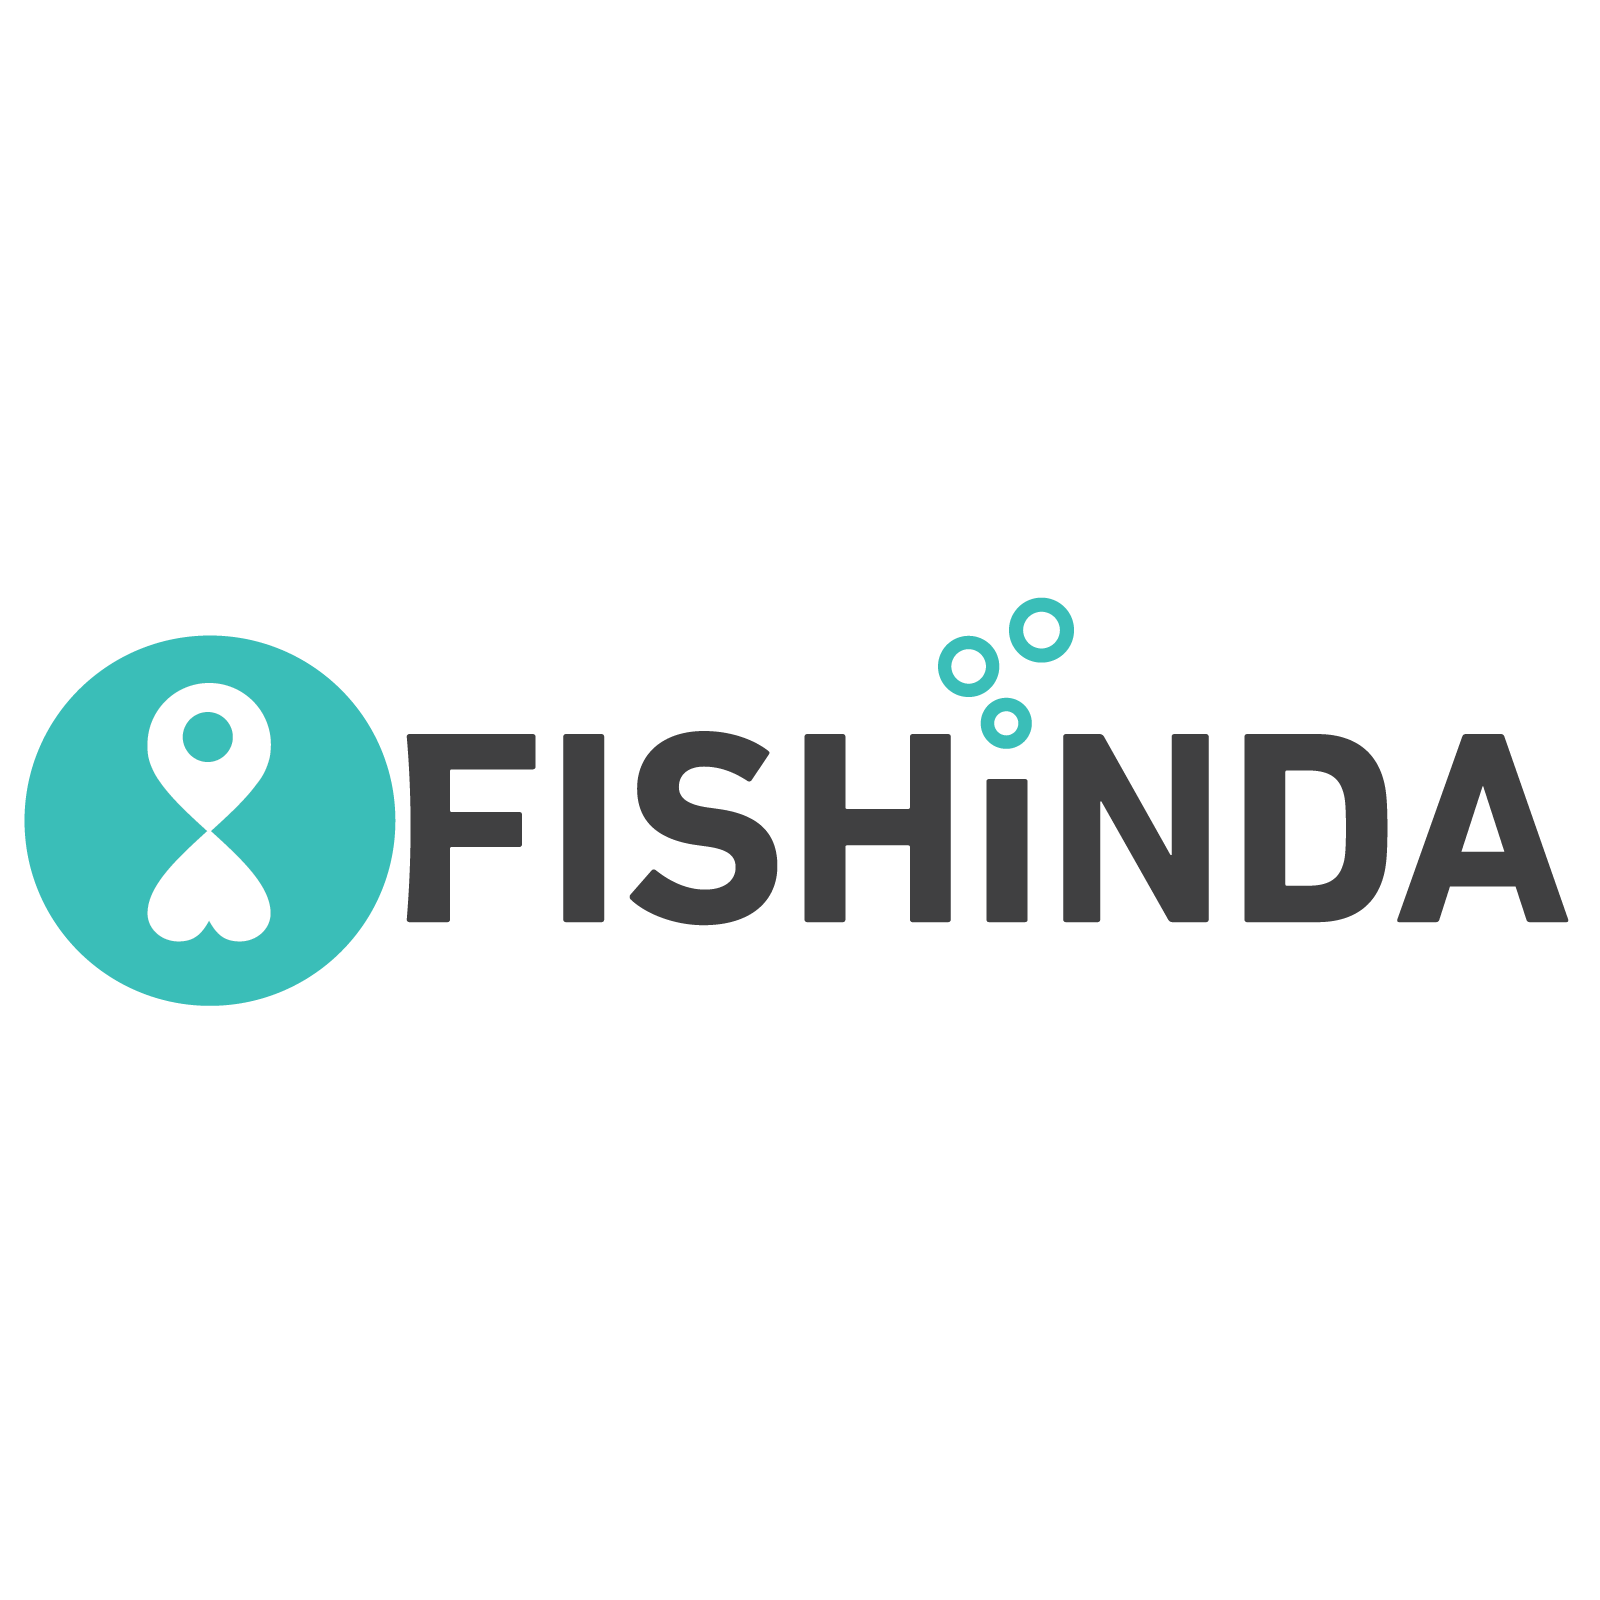 fishinda